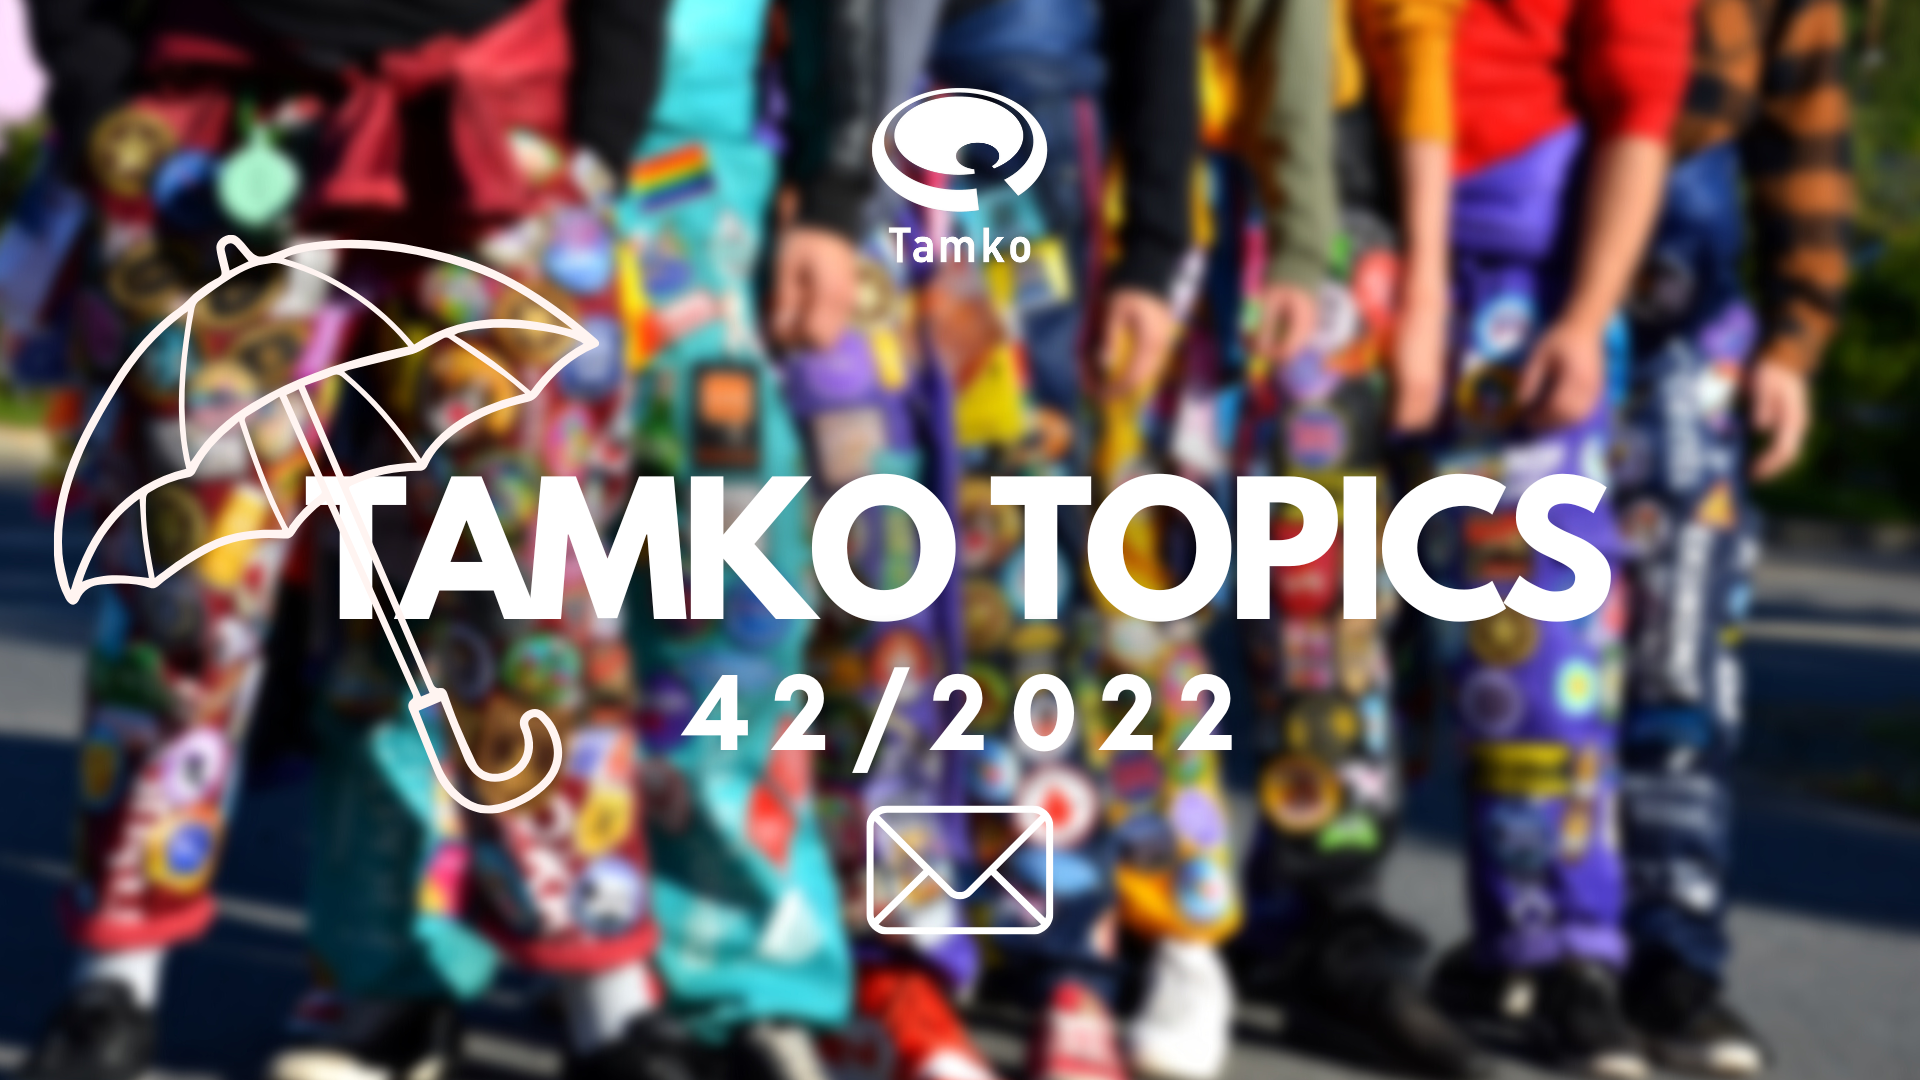 TAMKO TOPICS 42/2022